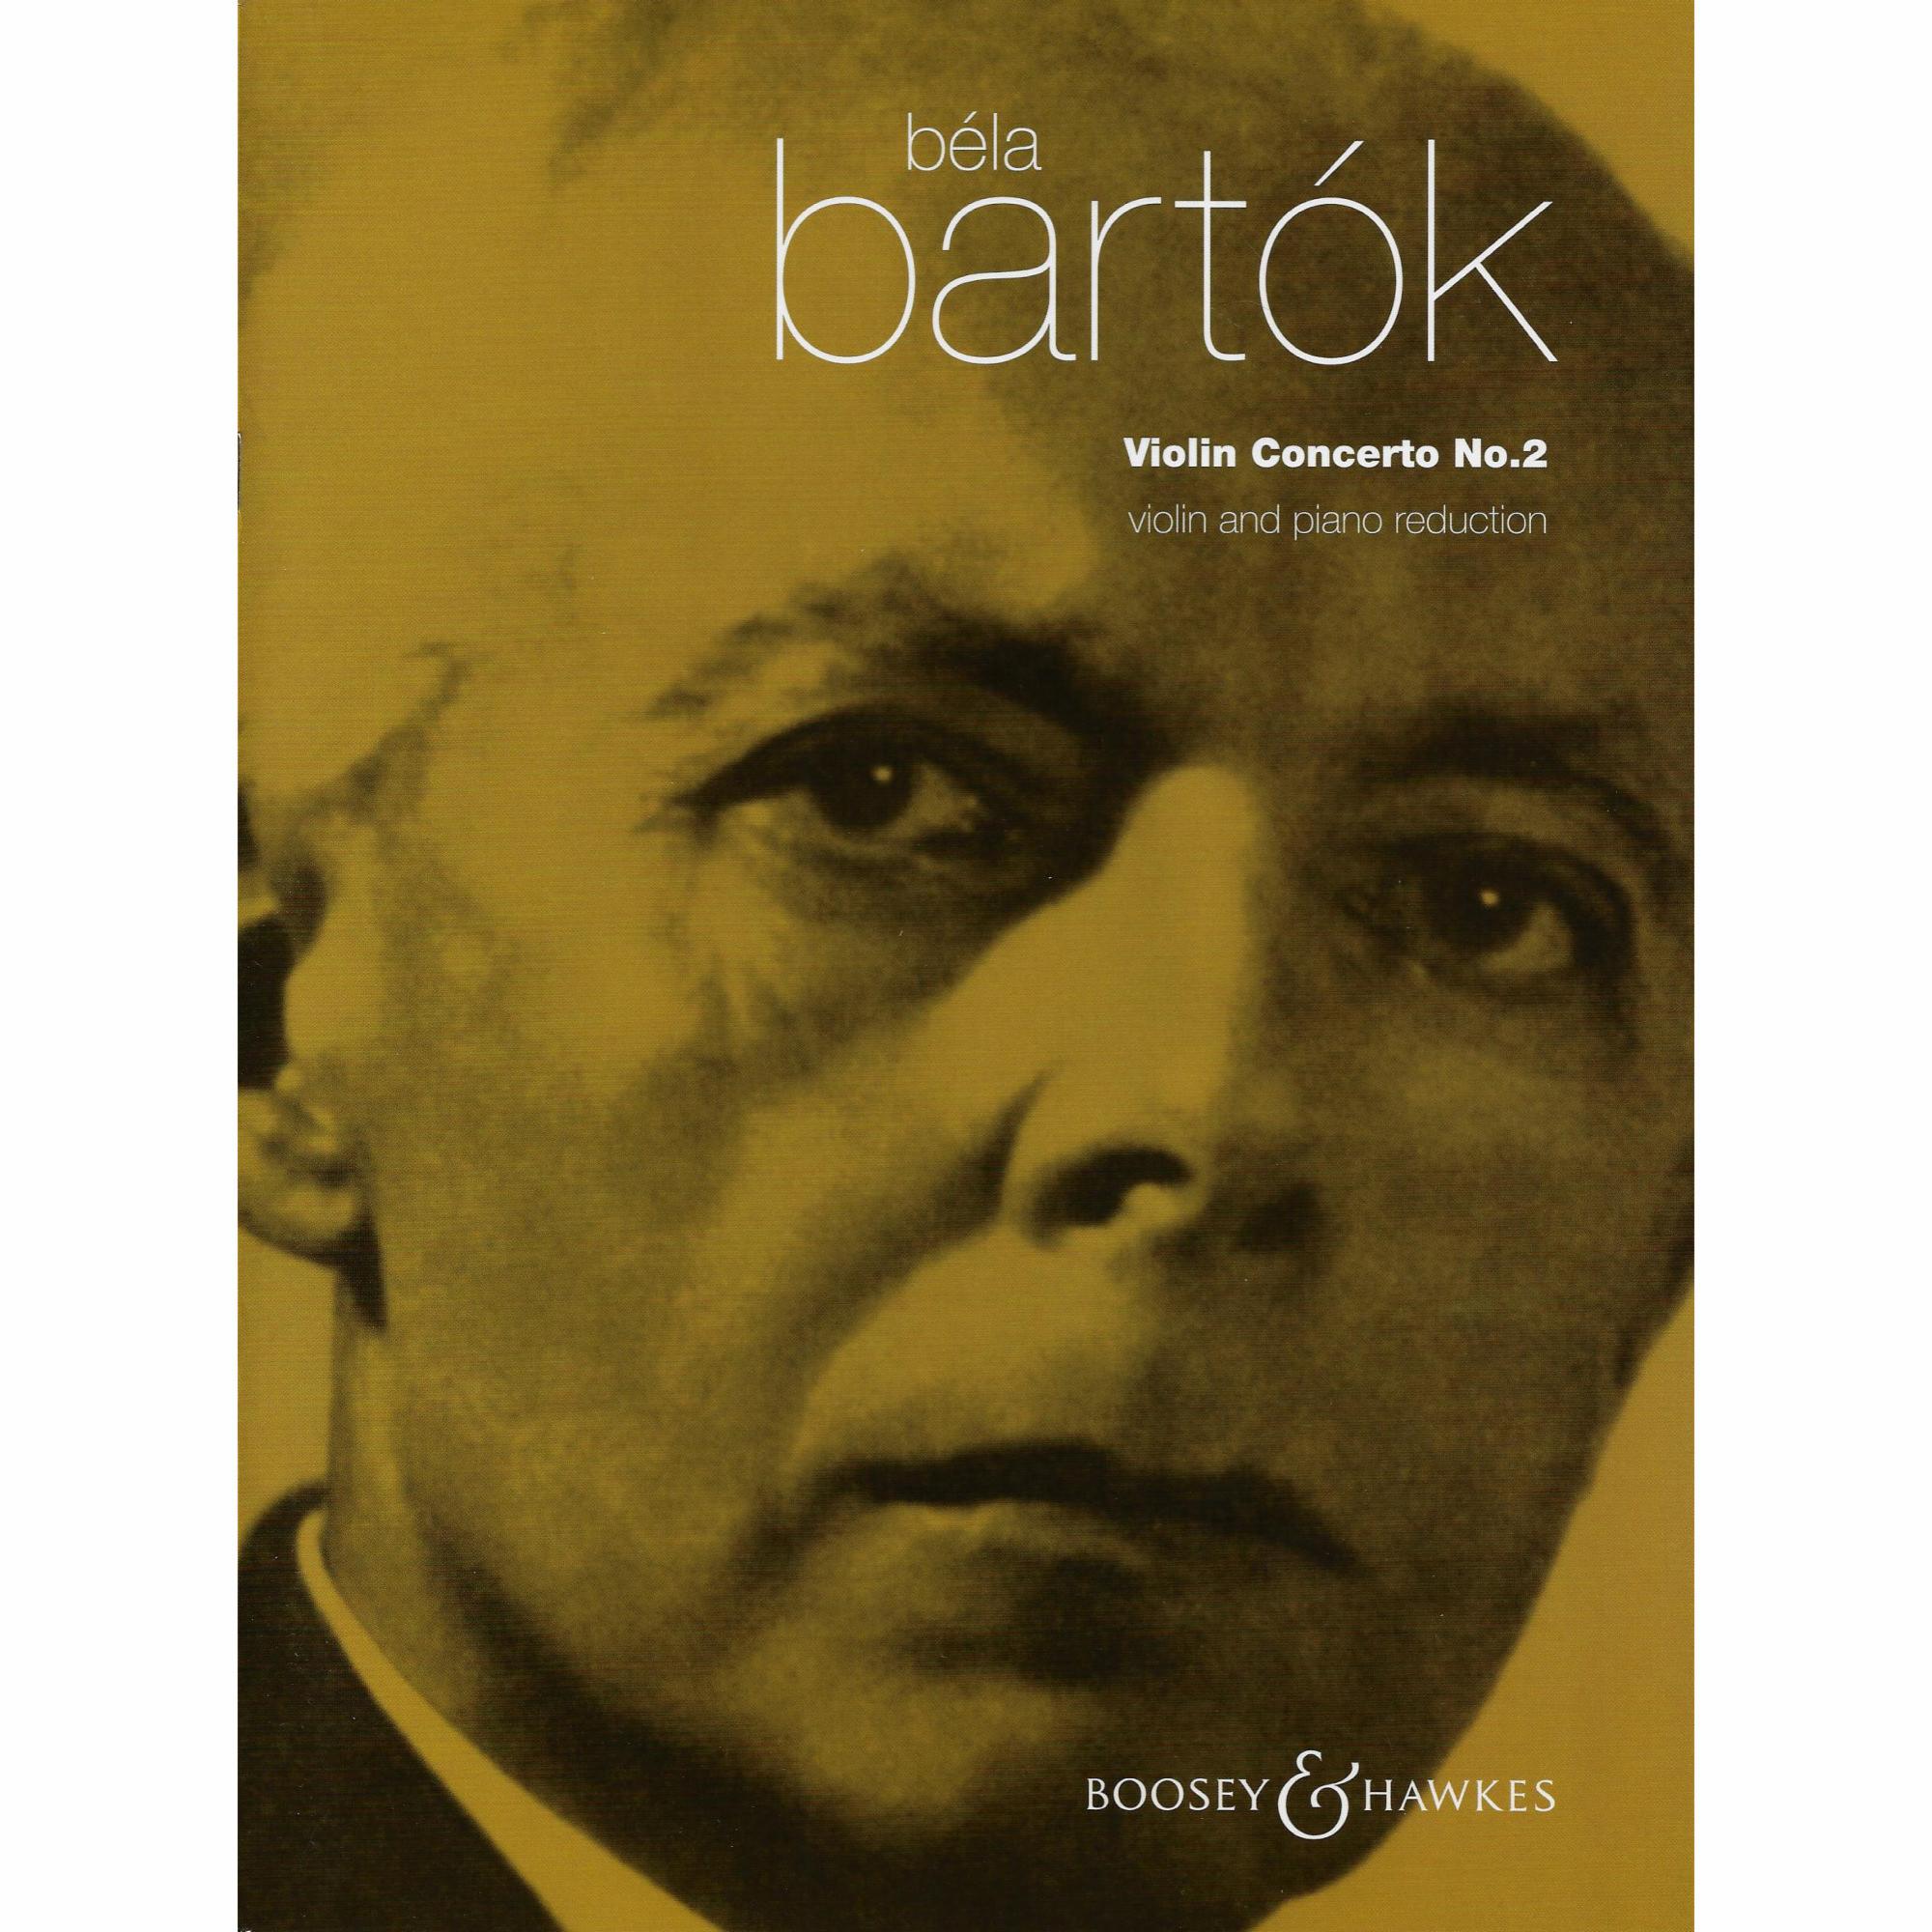 Bartok -- Violin Concerto No. 2 for Violin and Piano